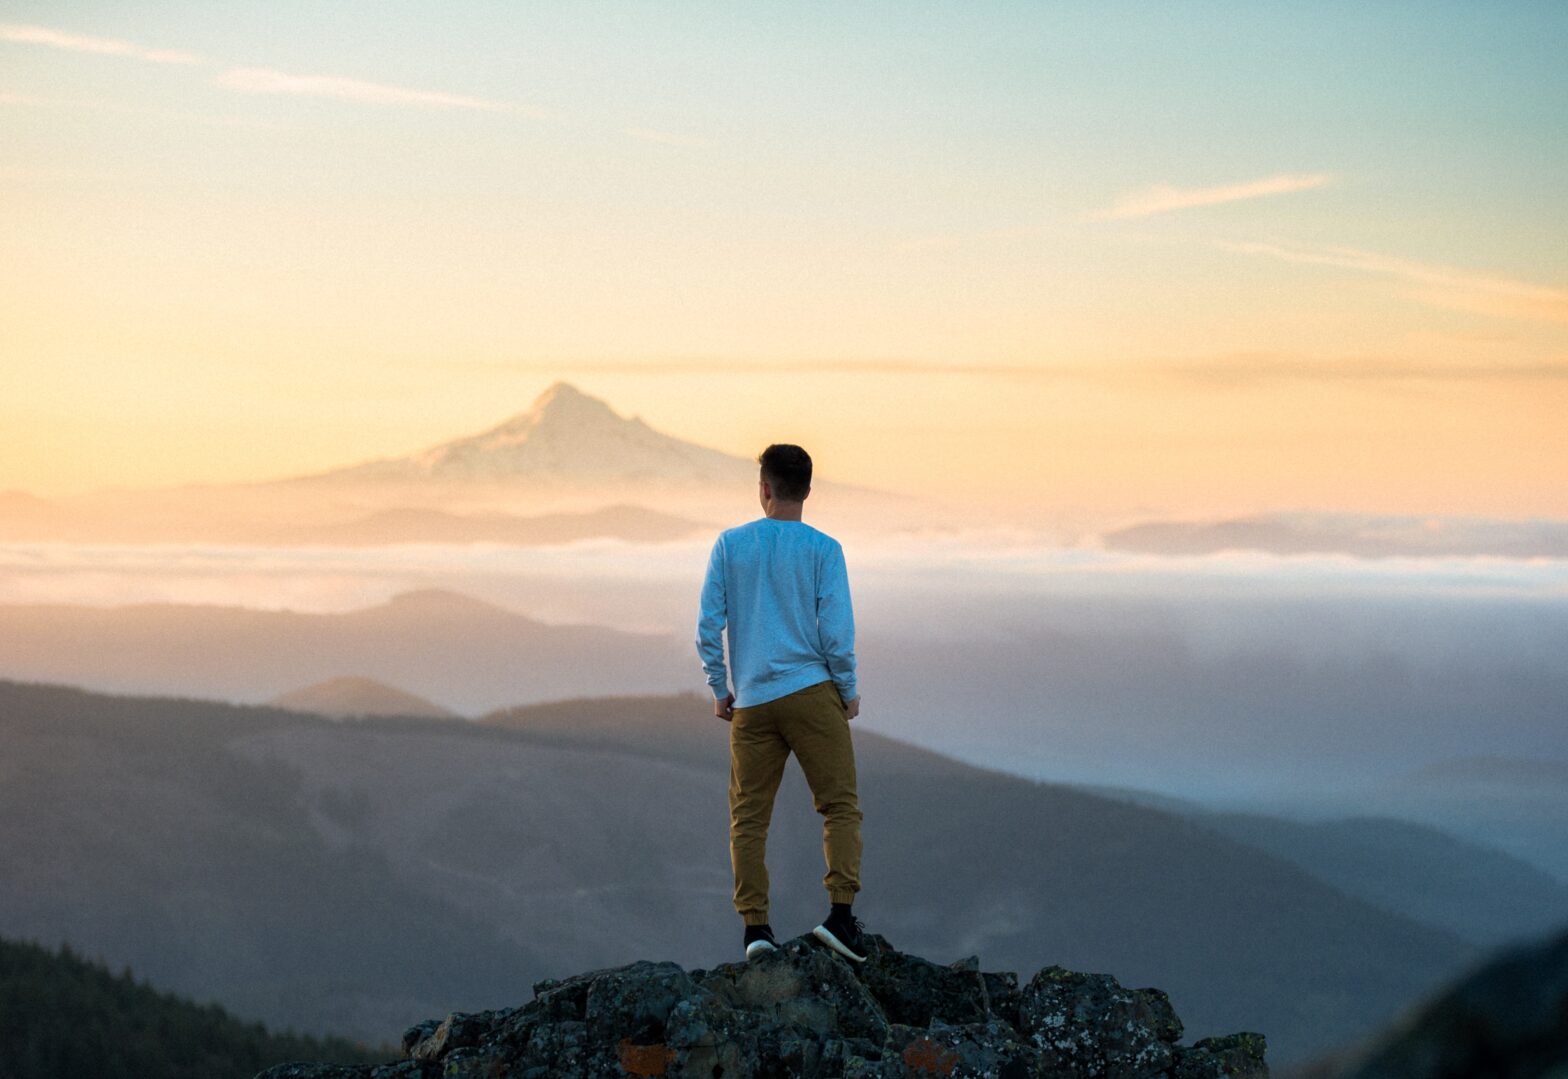 Man on mountain top looking at the horizon